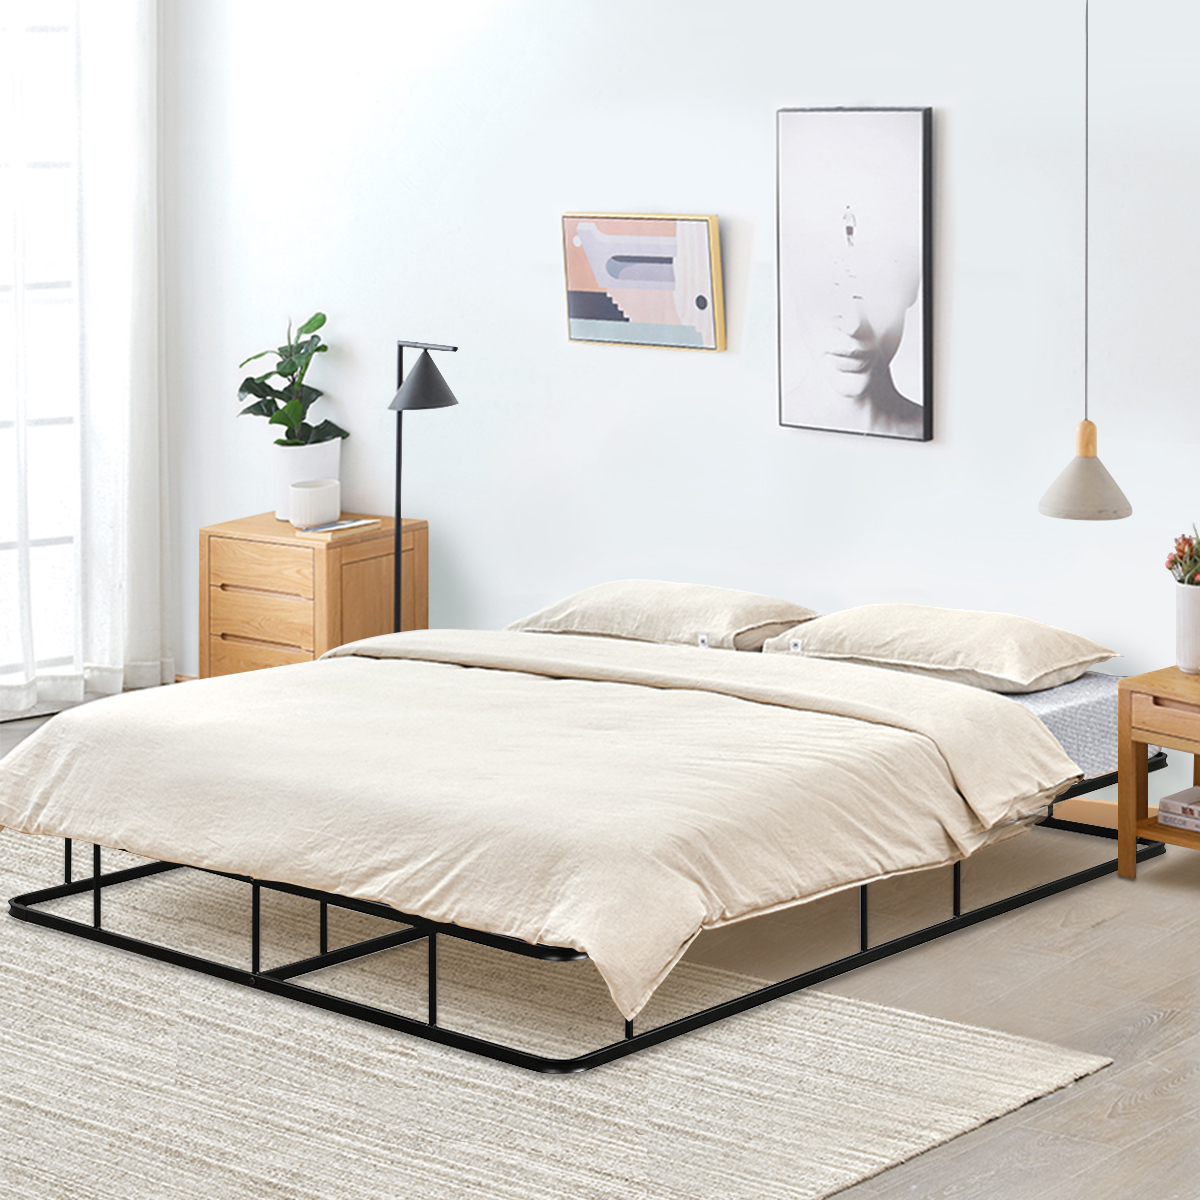 Topbuy Full Size Bed Frame Steel Slat Mattress - image 4 of 9